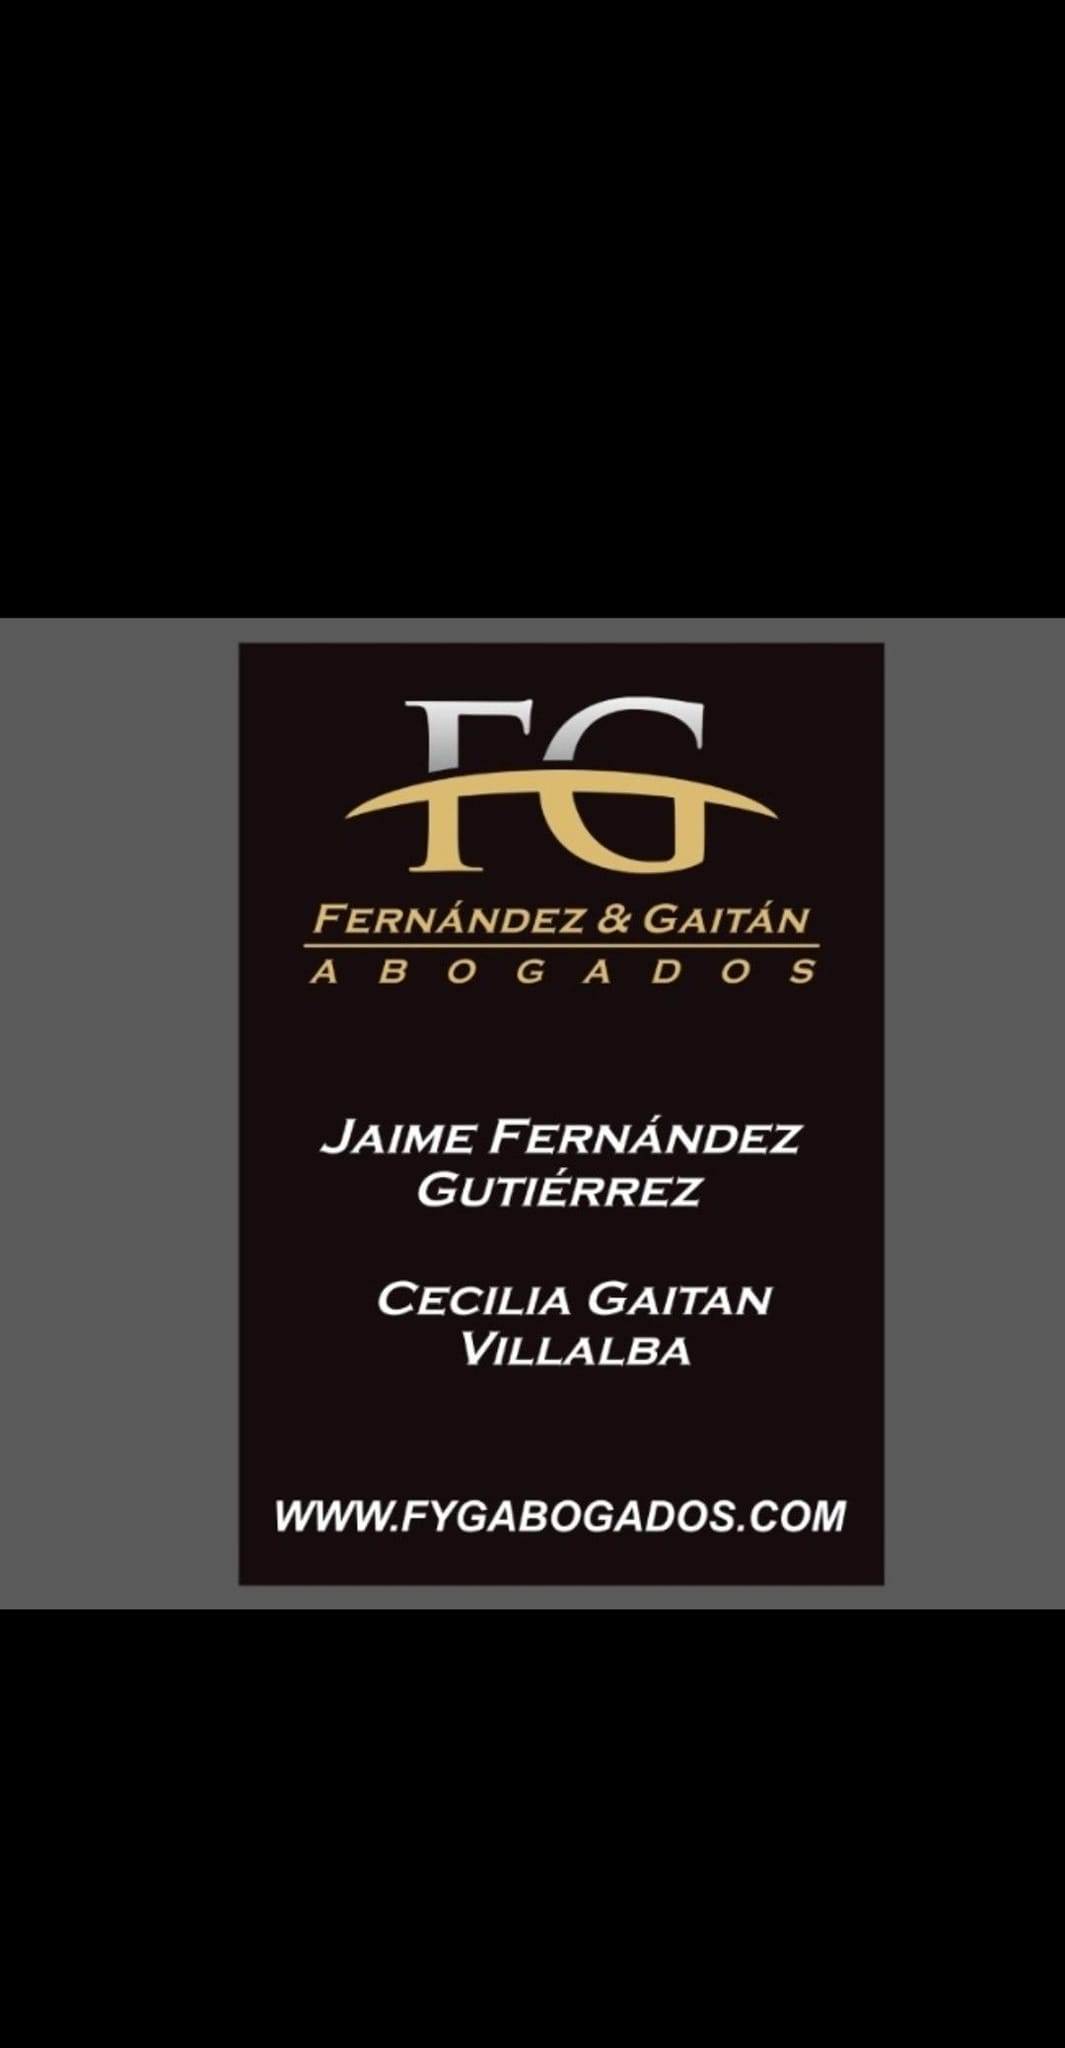 FERNANDEZ & GAITAN ABOGADOS